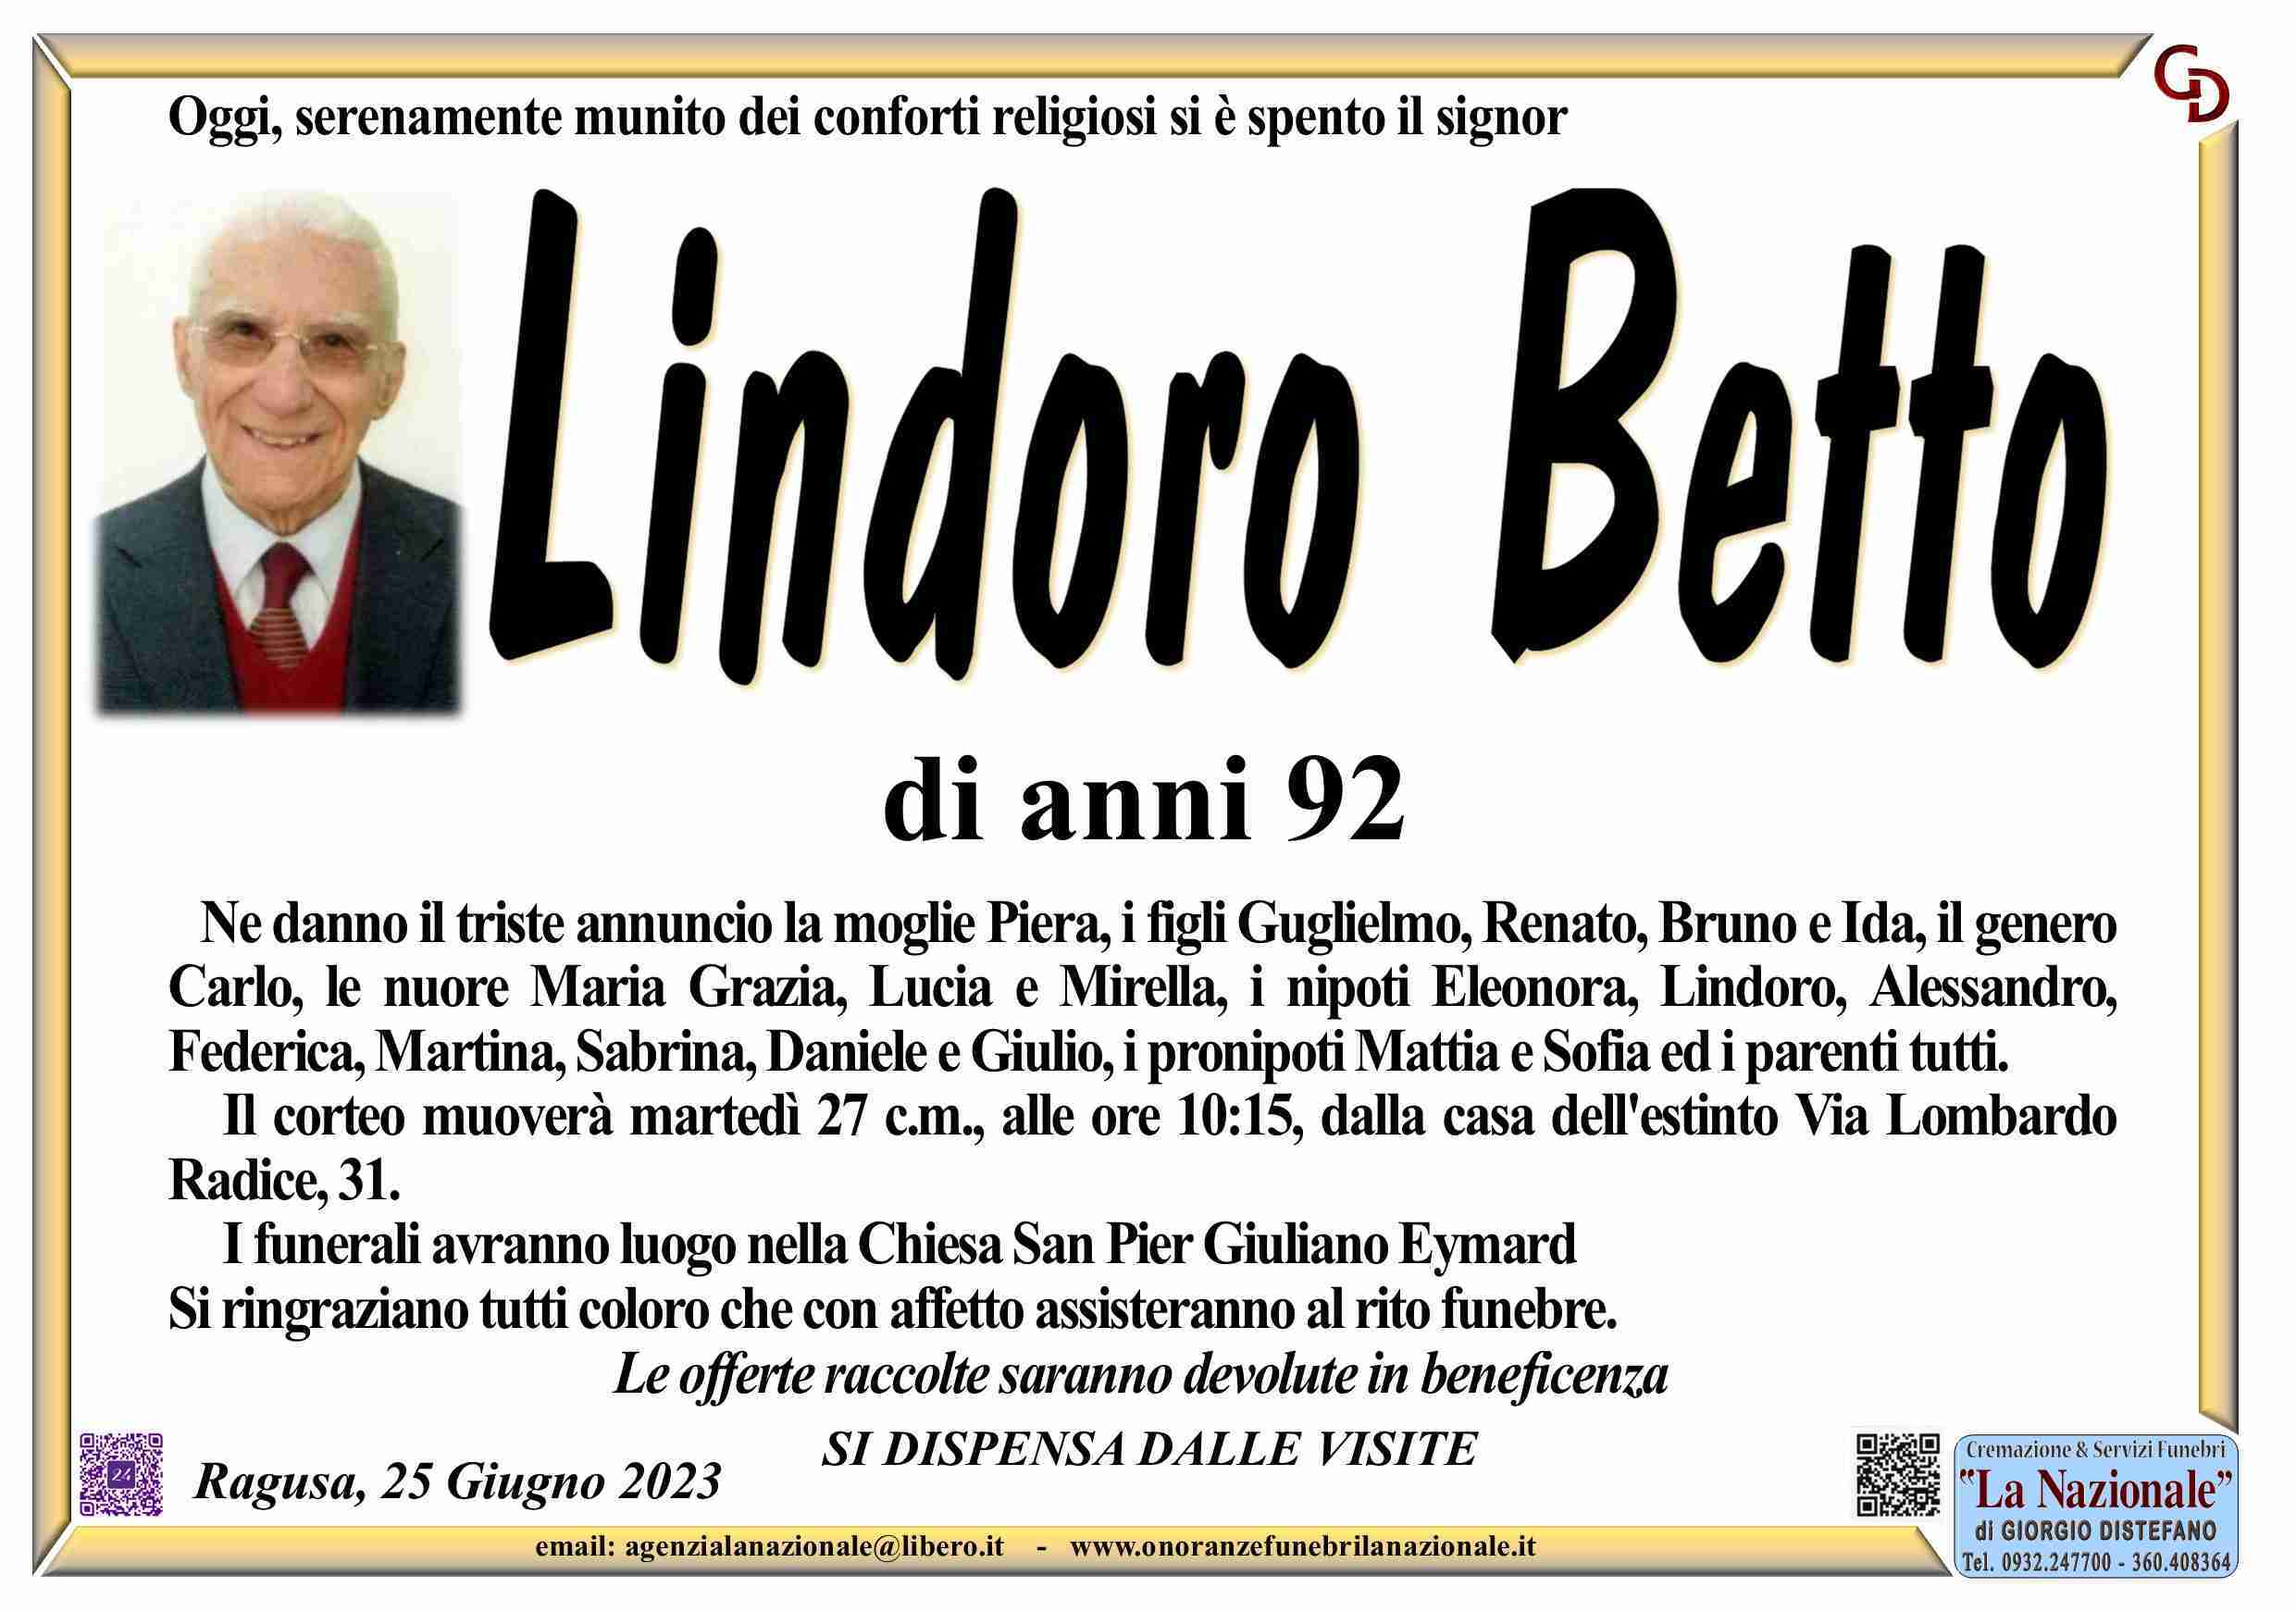 Lindoro Betto